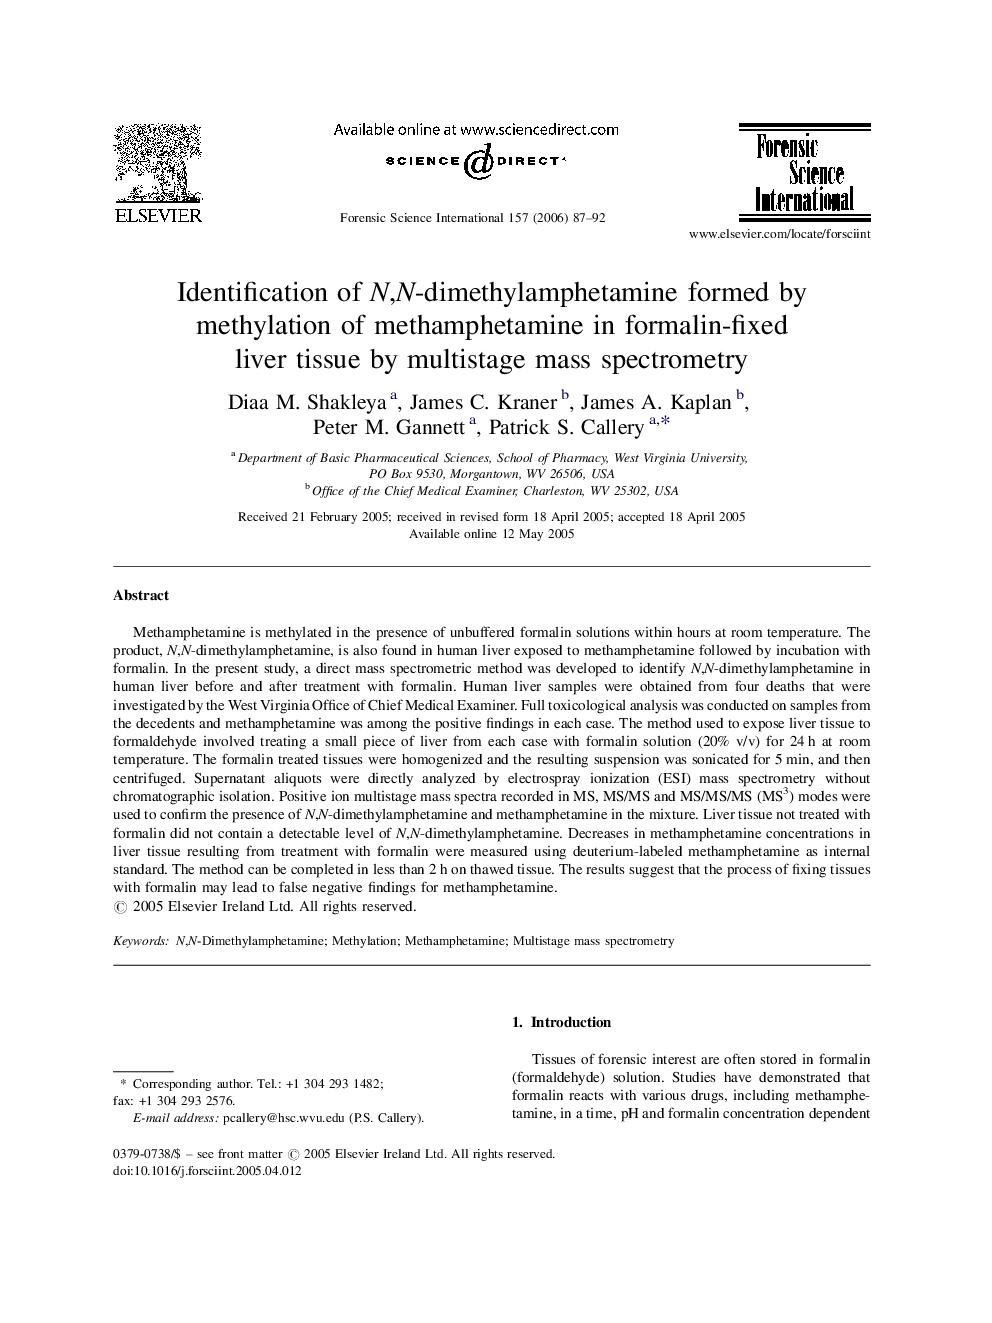 Identification of N,N-dimethylamphetamine formed by methylation of methamphetamine in formalin-fixed liver tissue by multistage mass spectrometry